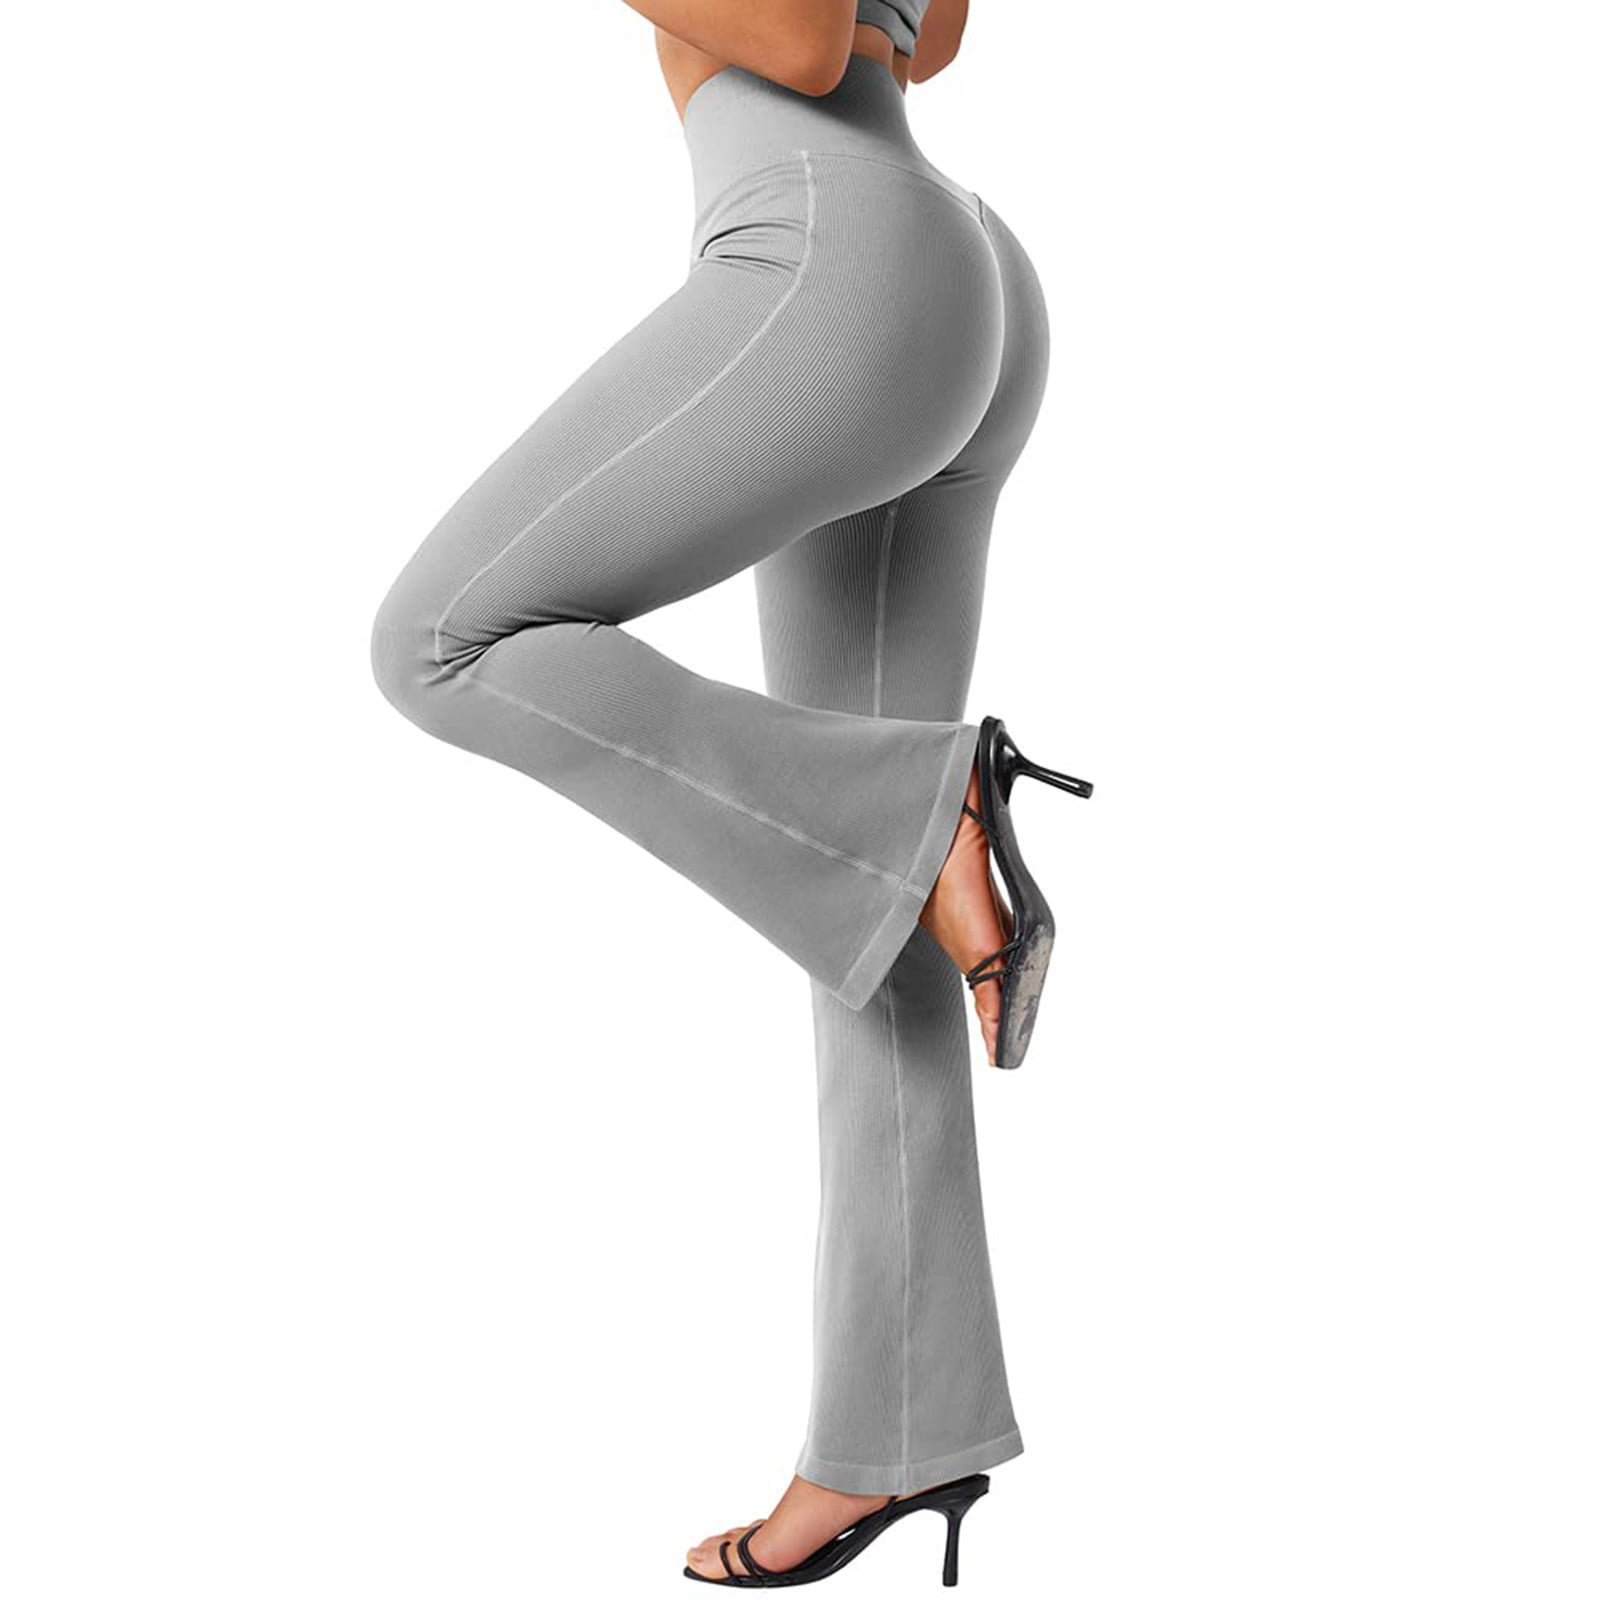 HBFAGFB Women High Seamless Grey Pants Casual Bootcut Yoga Pants Flare Leggings XL Size Waist Ribbed